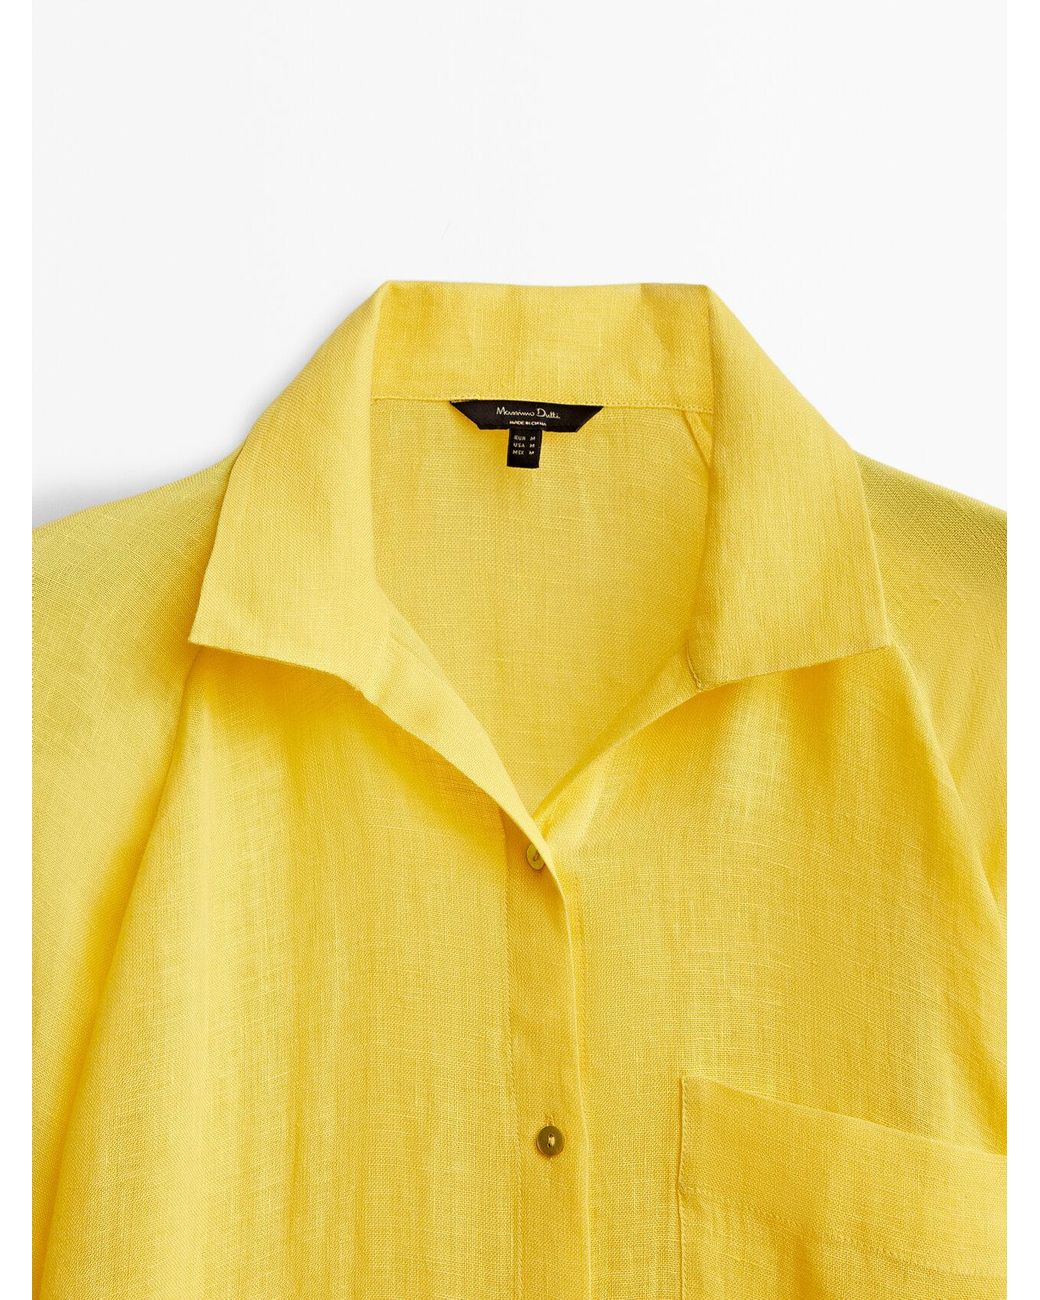 MASSIMO DUTTI 100% Linen Oversize Shirt Blouse in Yellow | Lyst